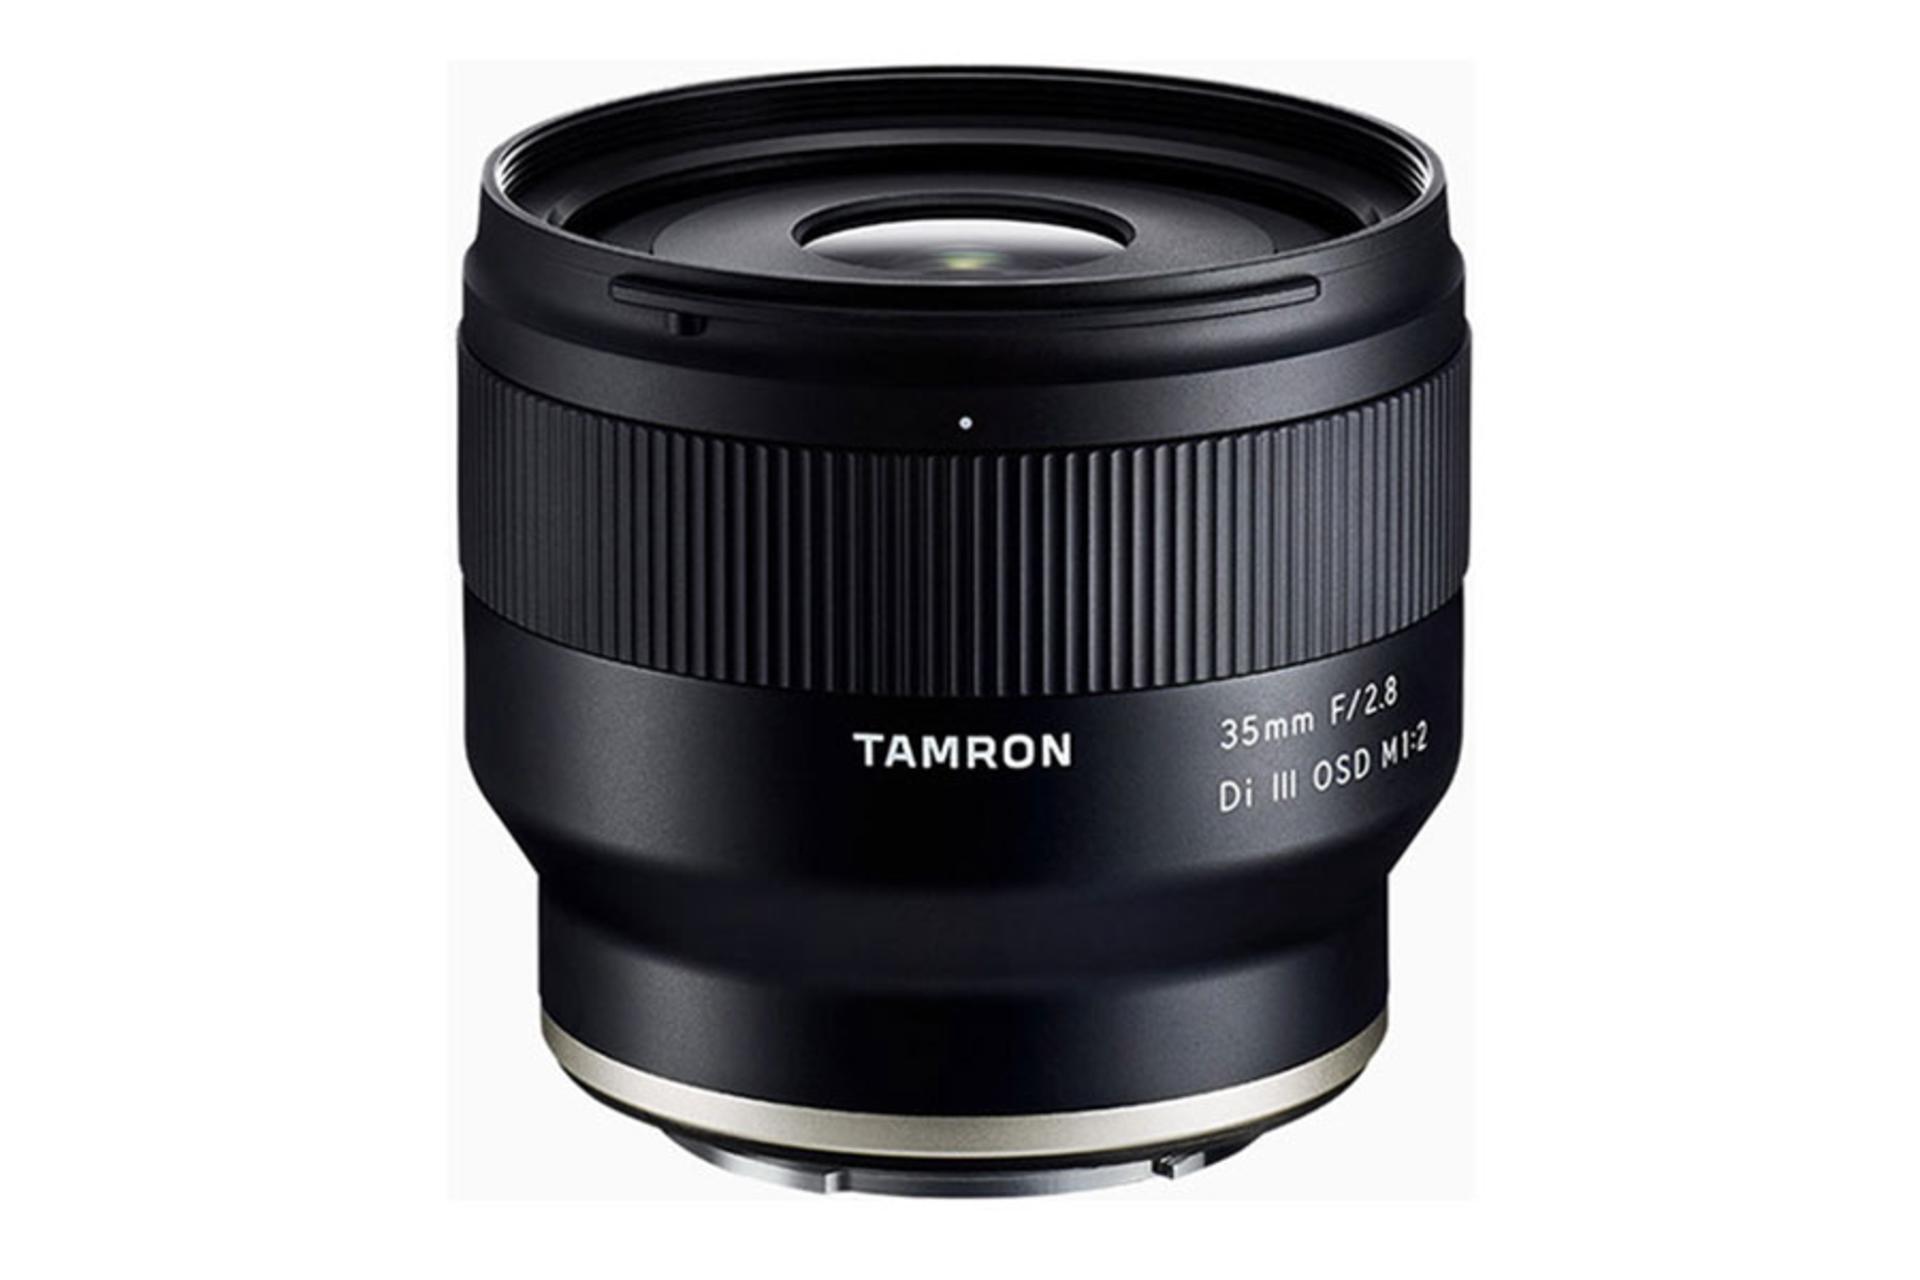 Tamron 35mm f/2.8 Di III OSD M 1:2 / تامرون